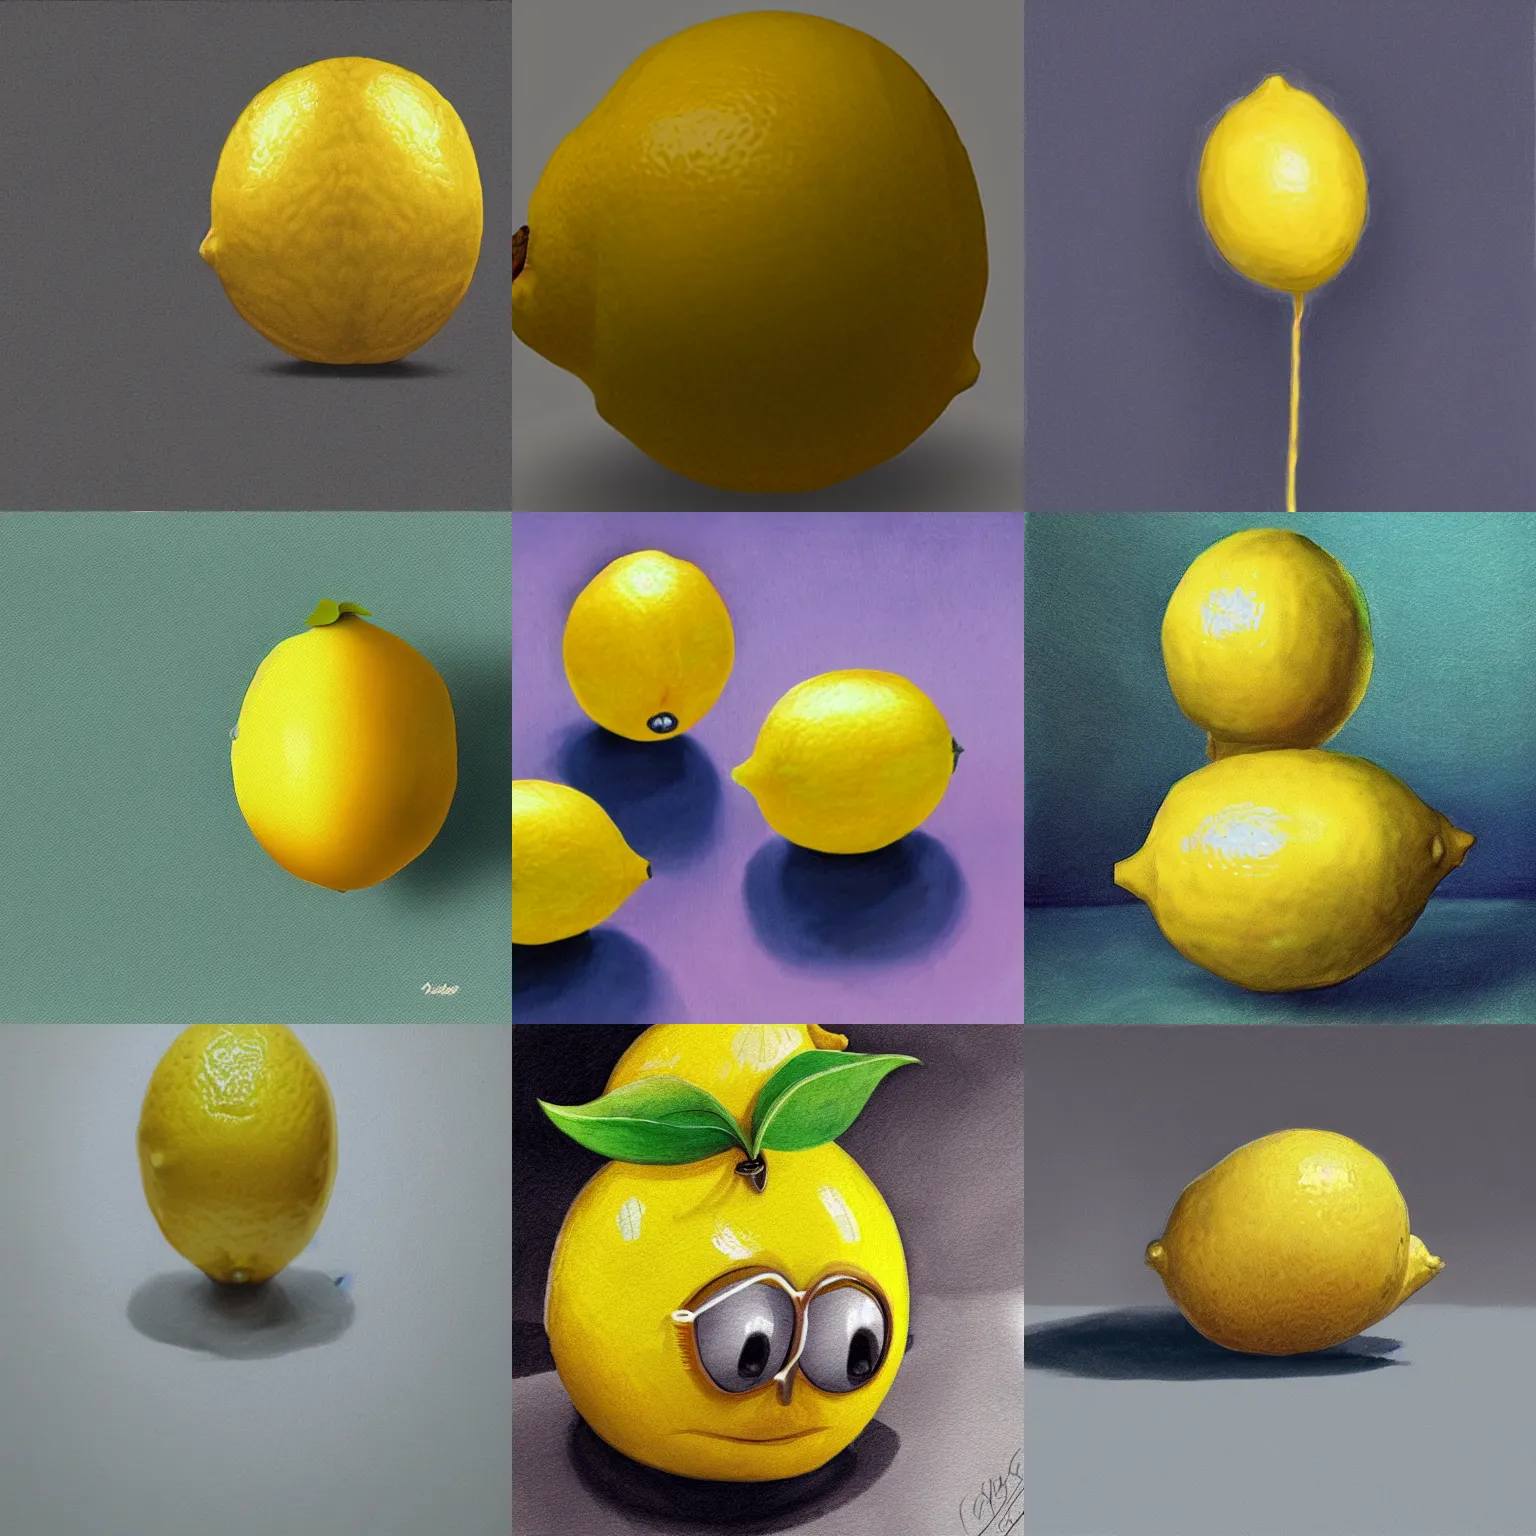 Prompt: a sad lemon, hyper realistic